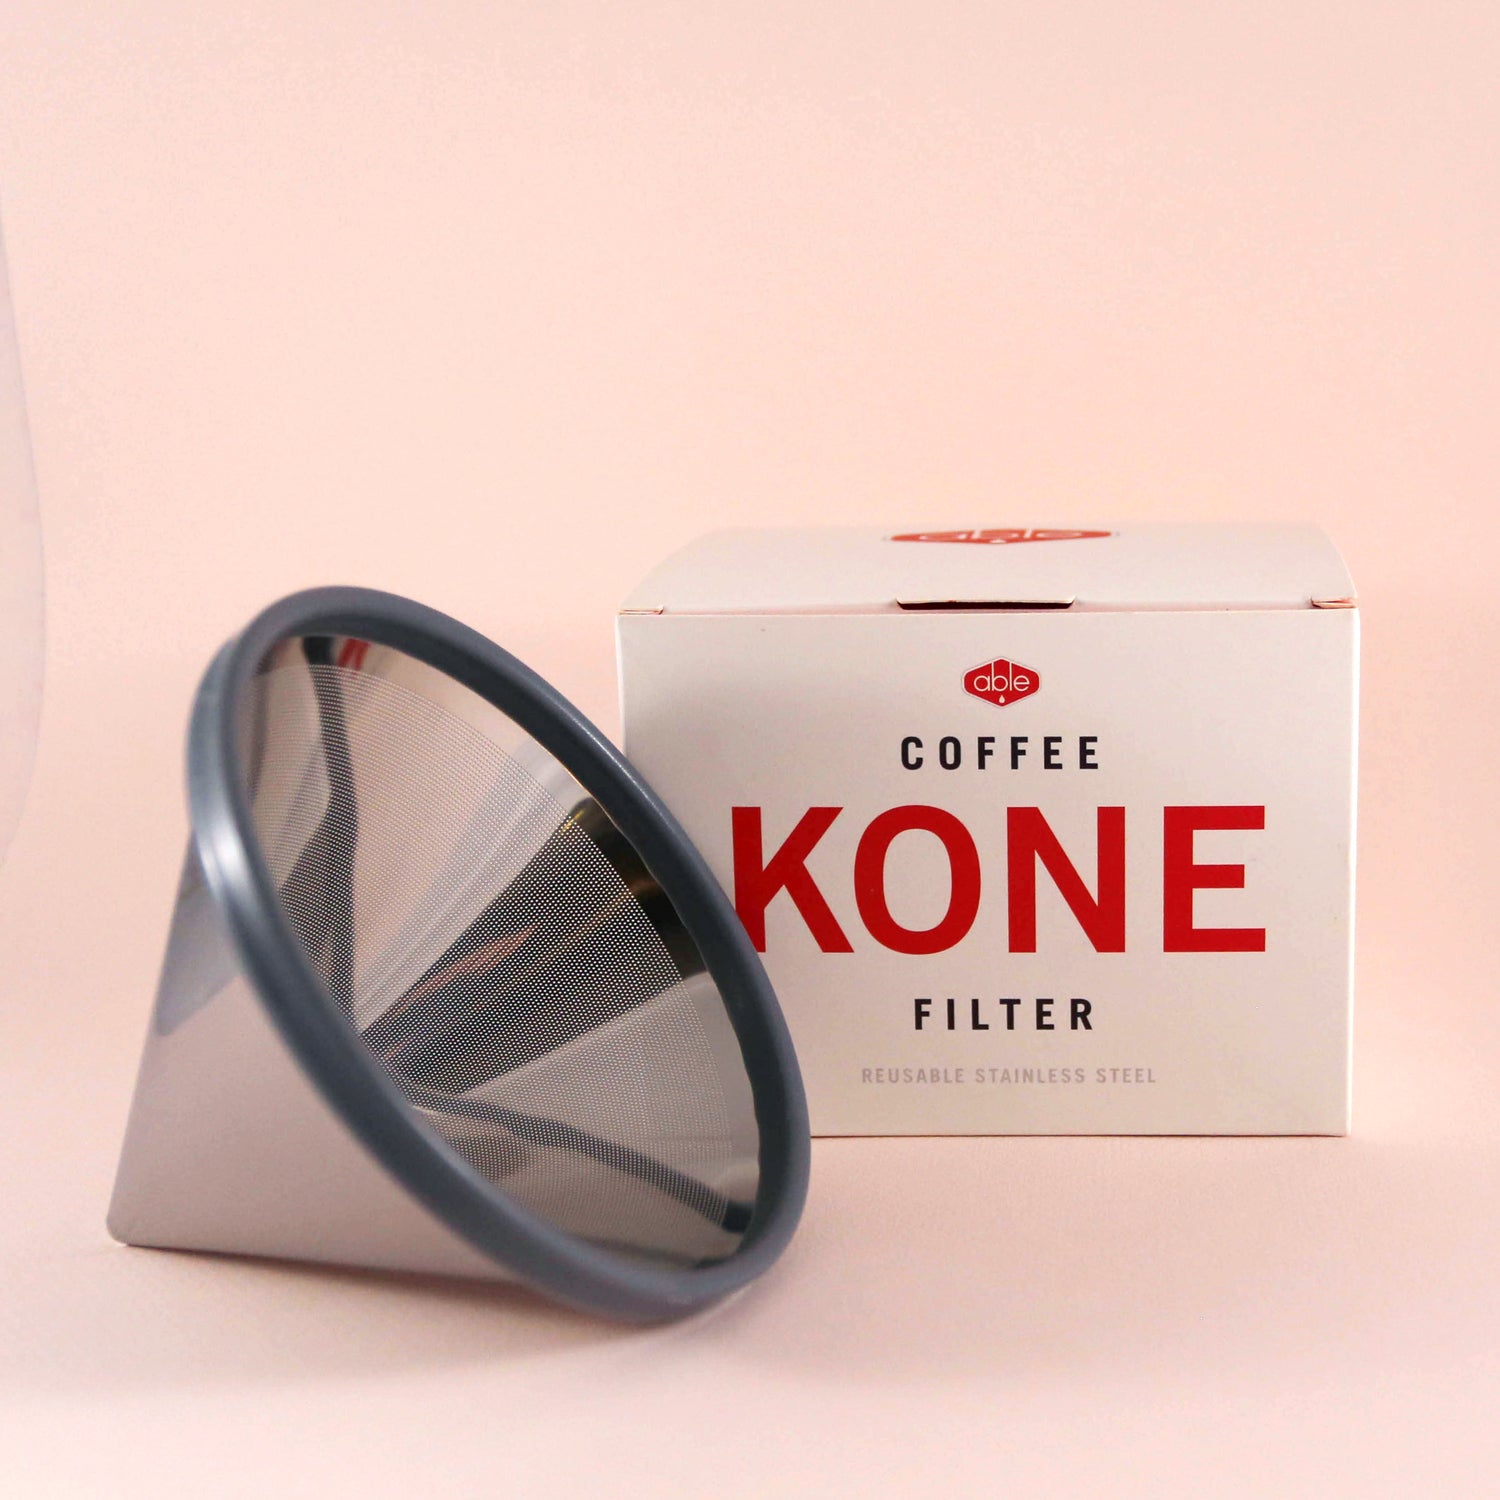 Able Coffee Kone